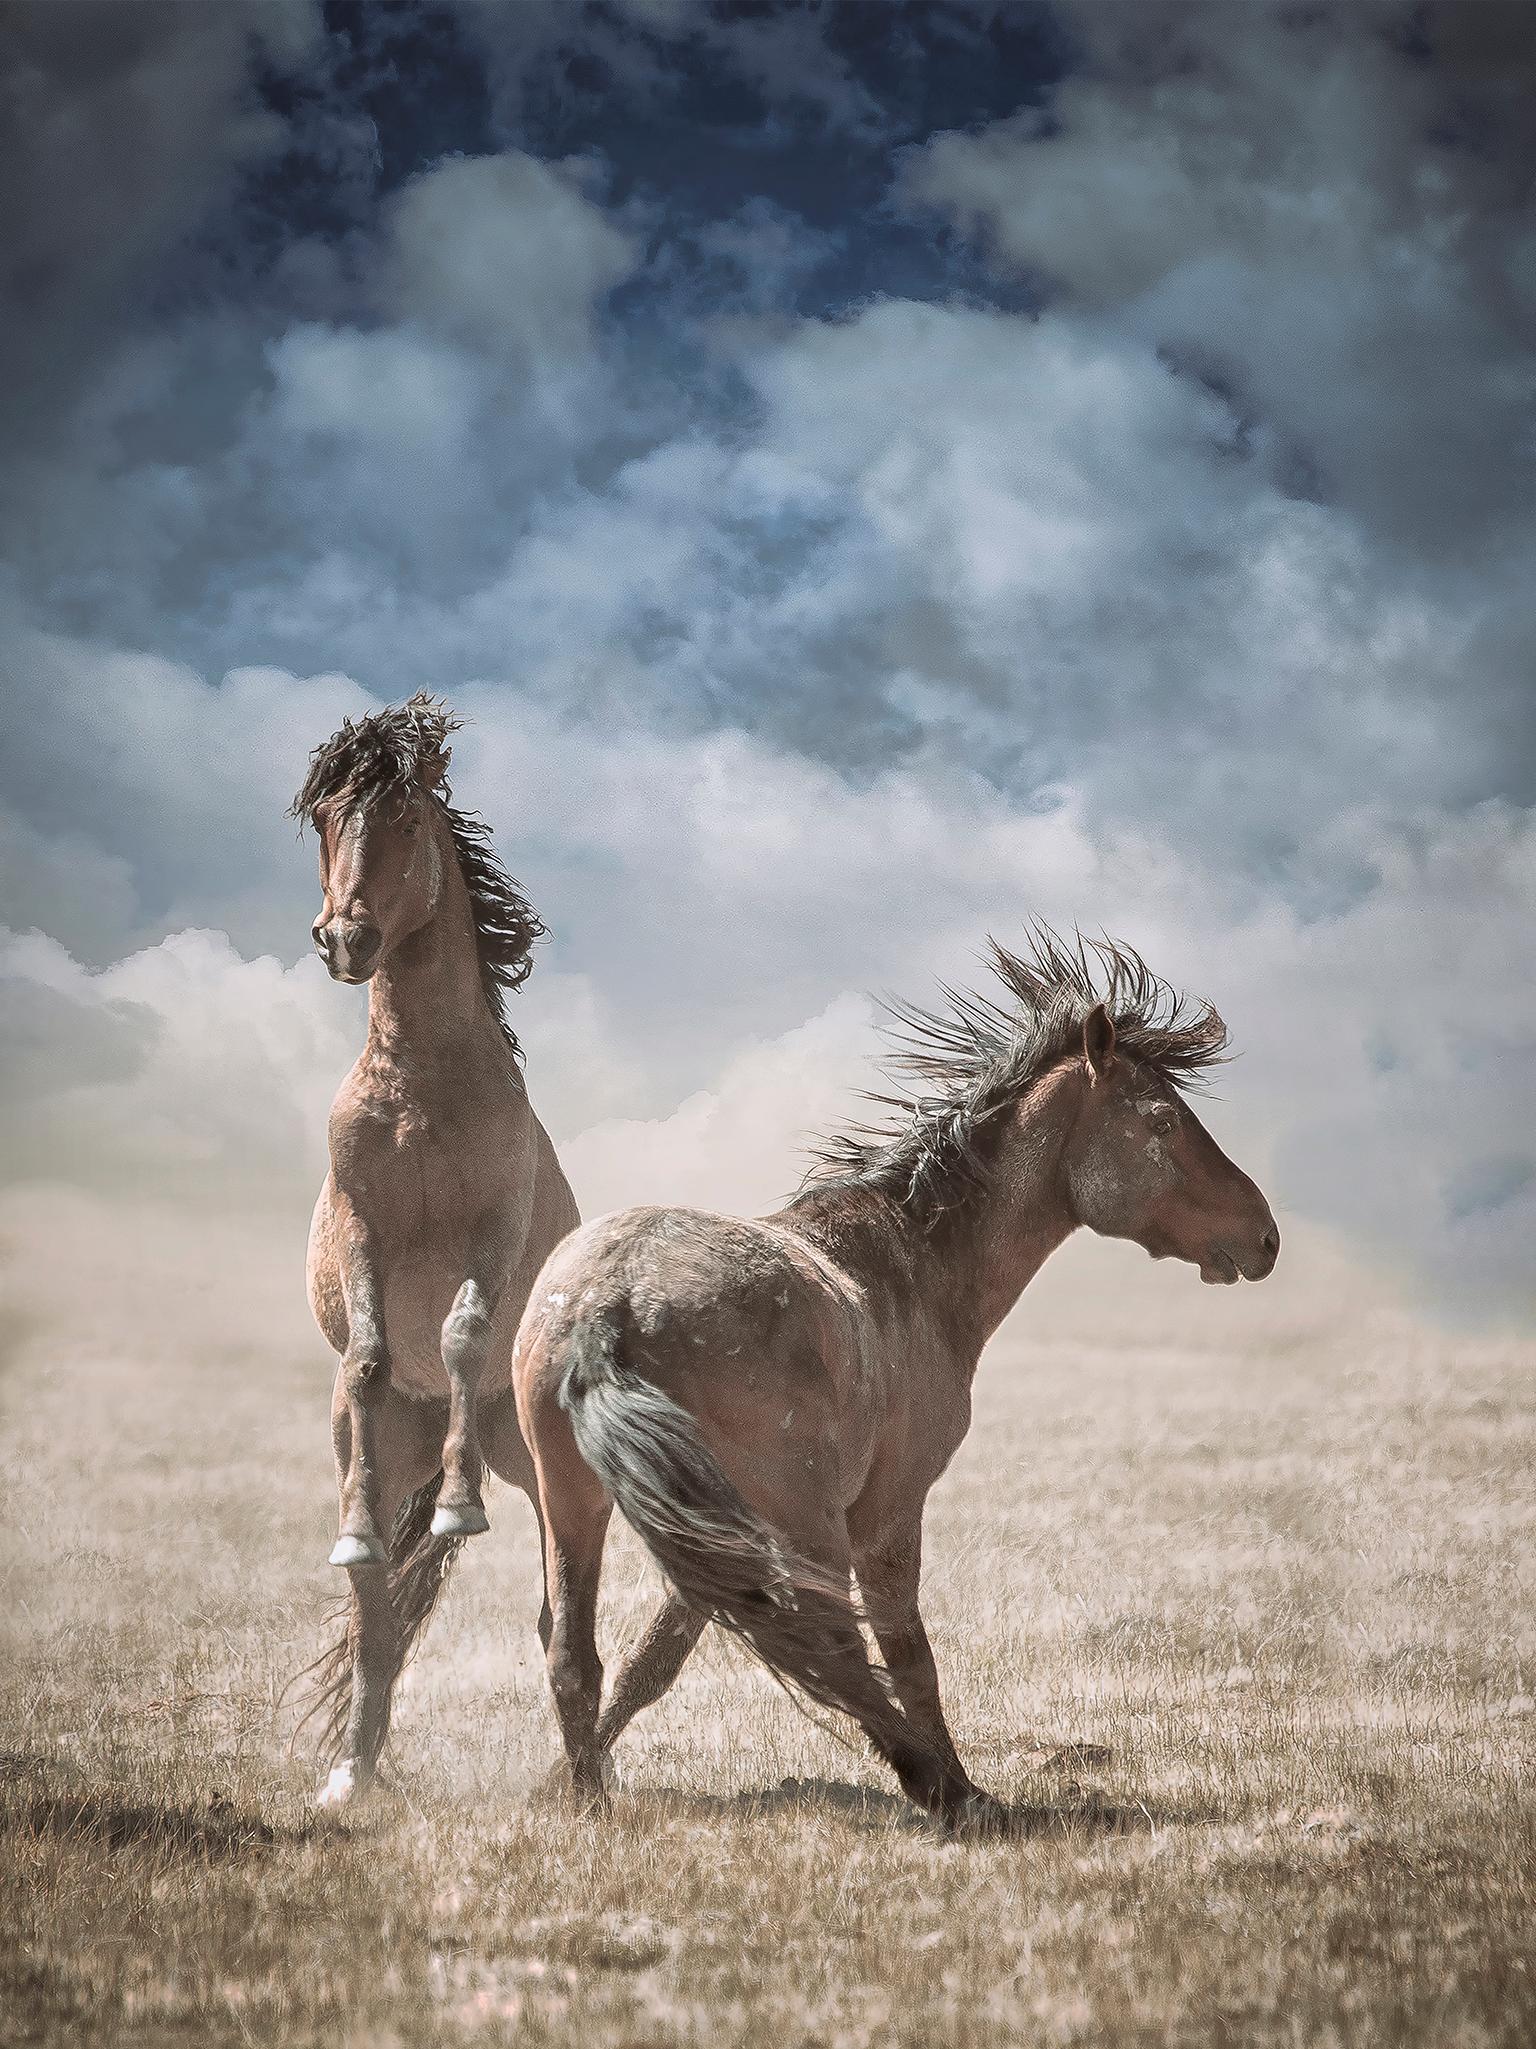  "Wonder Horses" 40x 60 - Wild Horses Photograph - Wild Mustangs Photography 